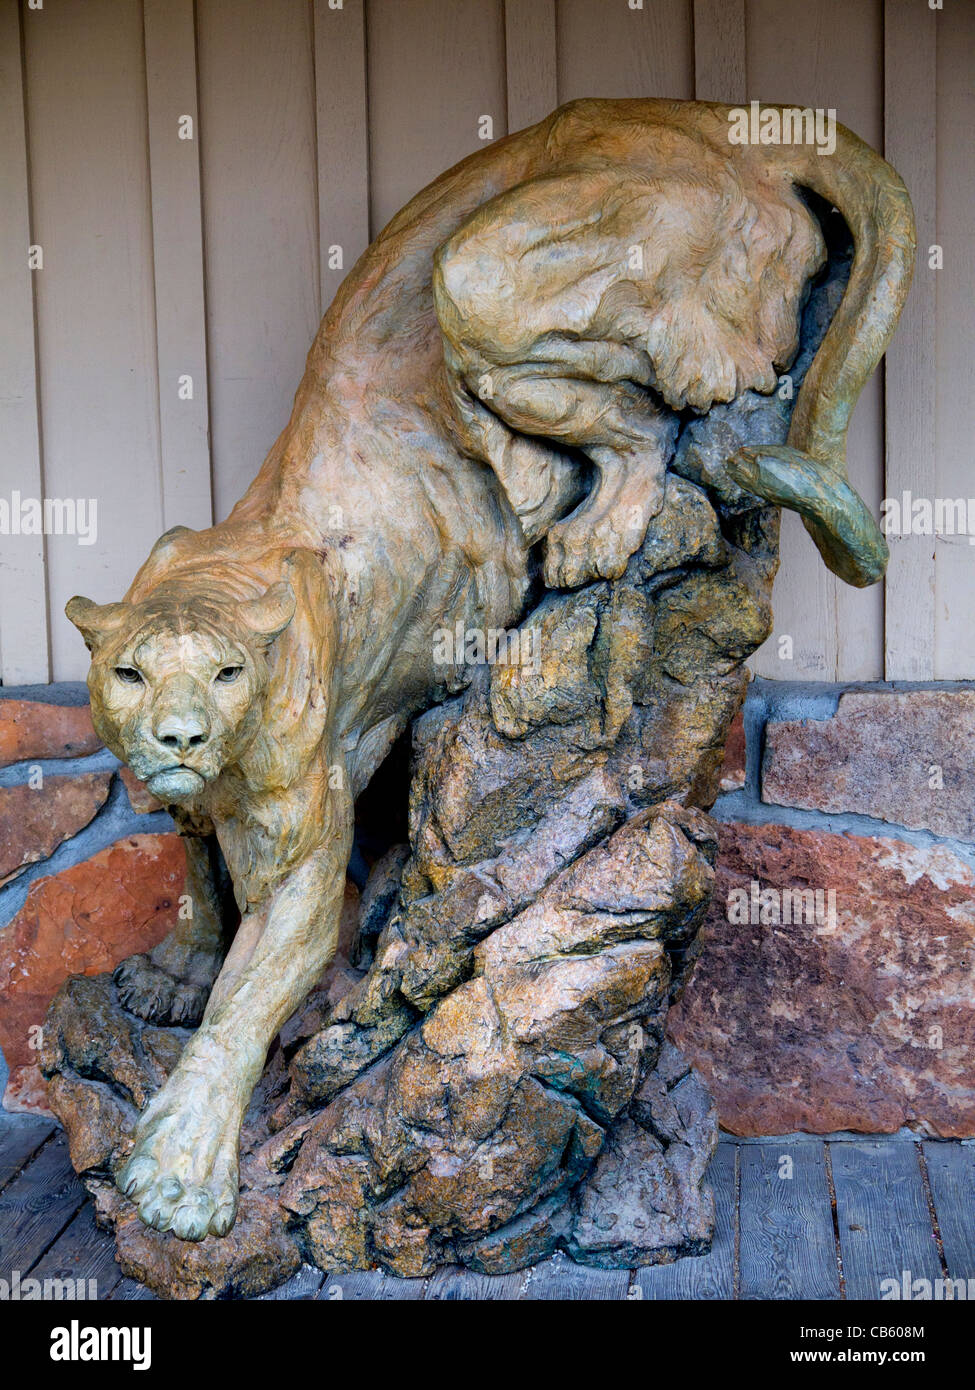 Mountain Lion or Puma Statue in Jackson Hole Wyoming USA Stock Photo - Alamy